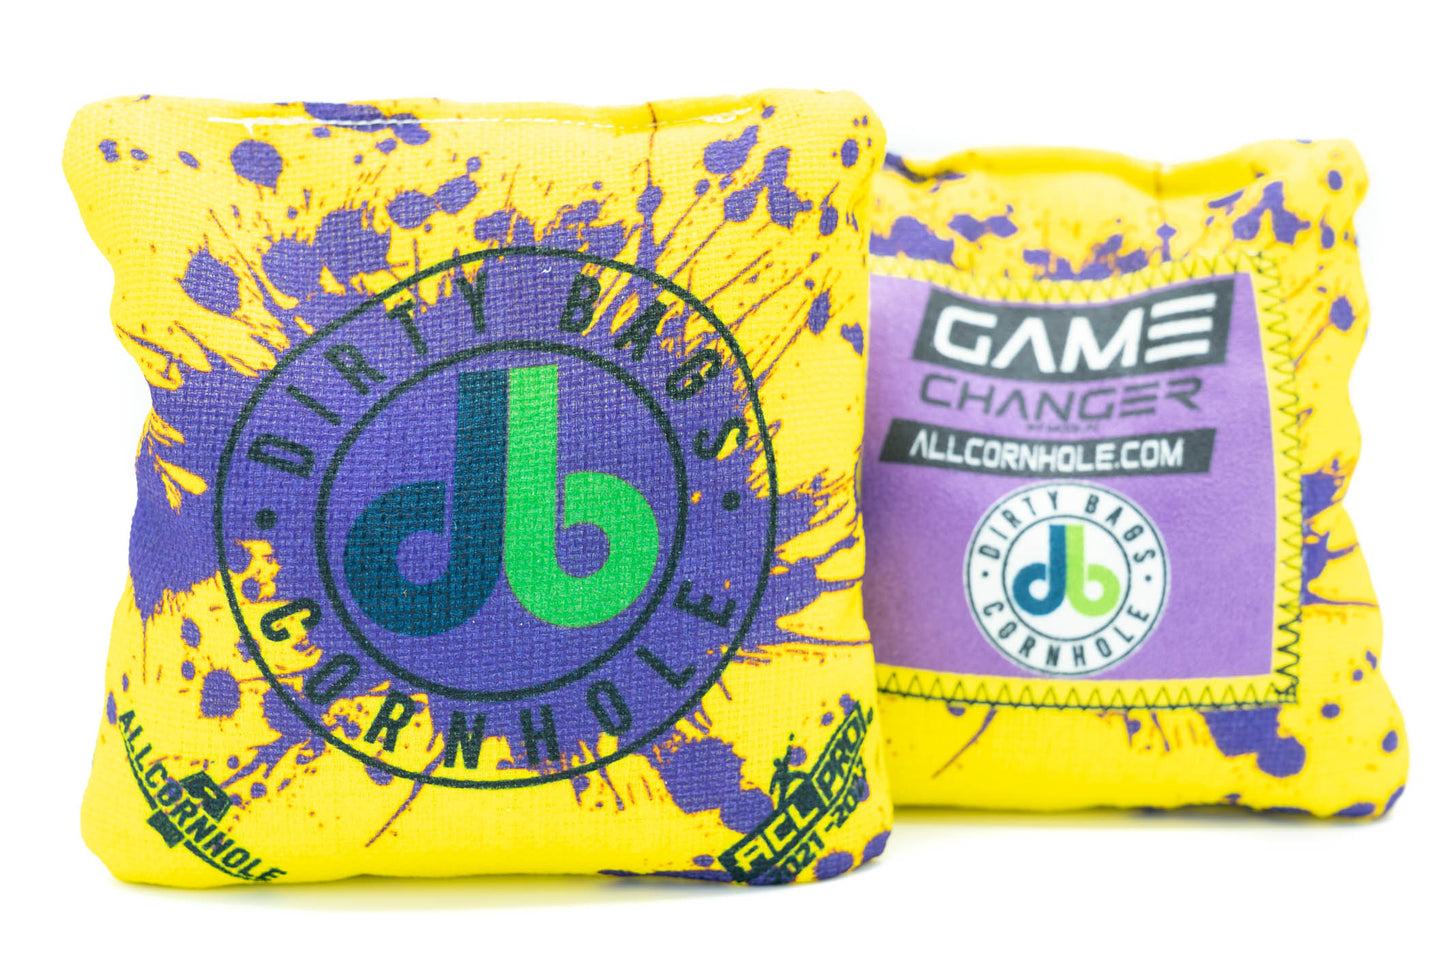 Game Changer Cornhole Bags - db Paint Splatter Edition (Set of 4)